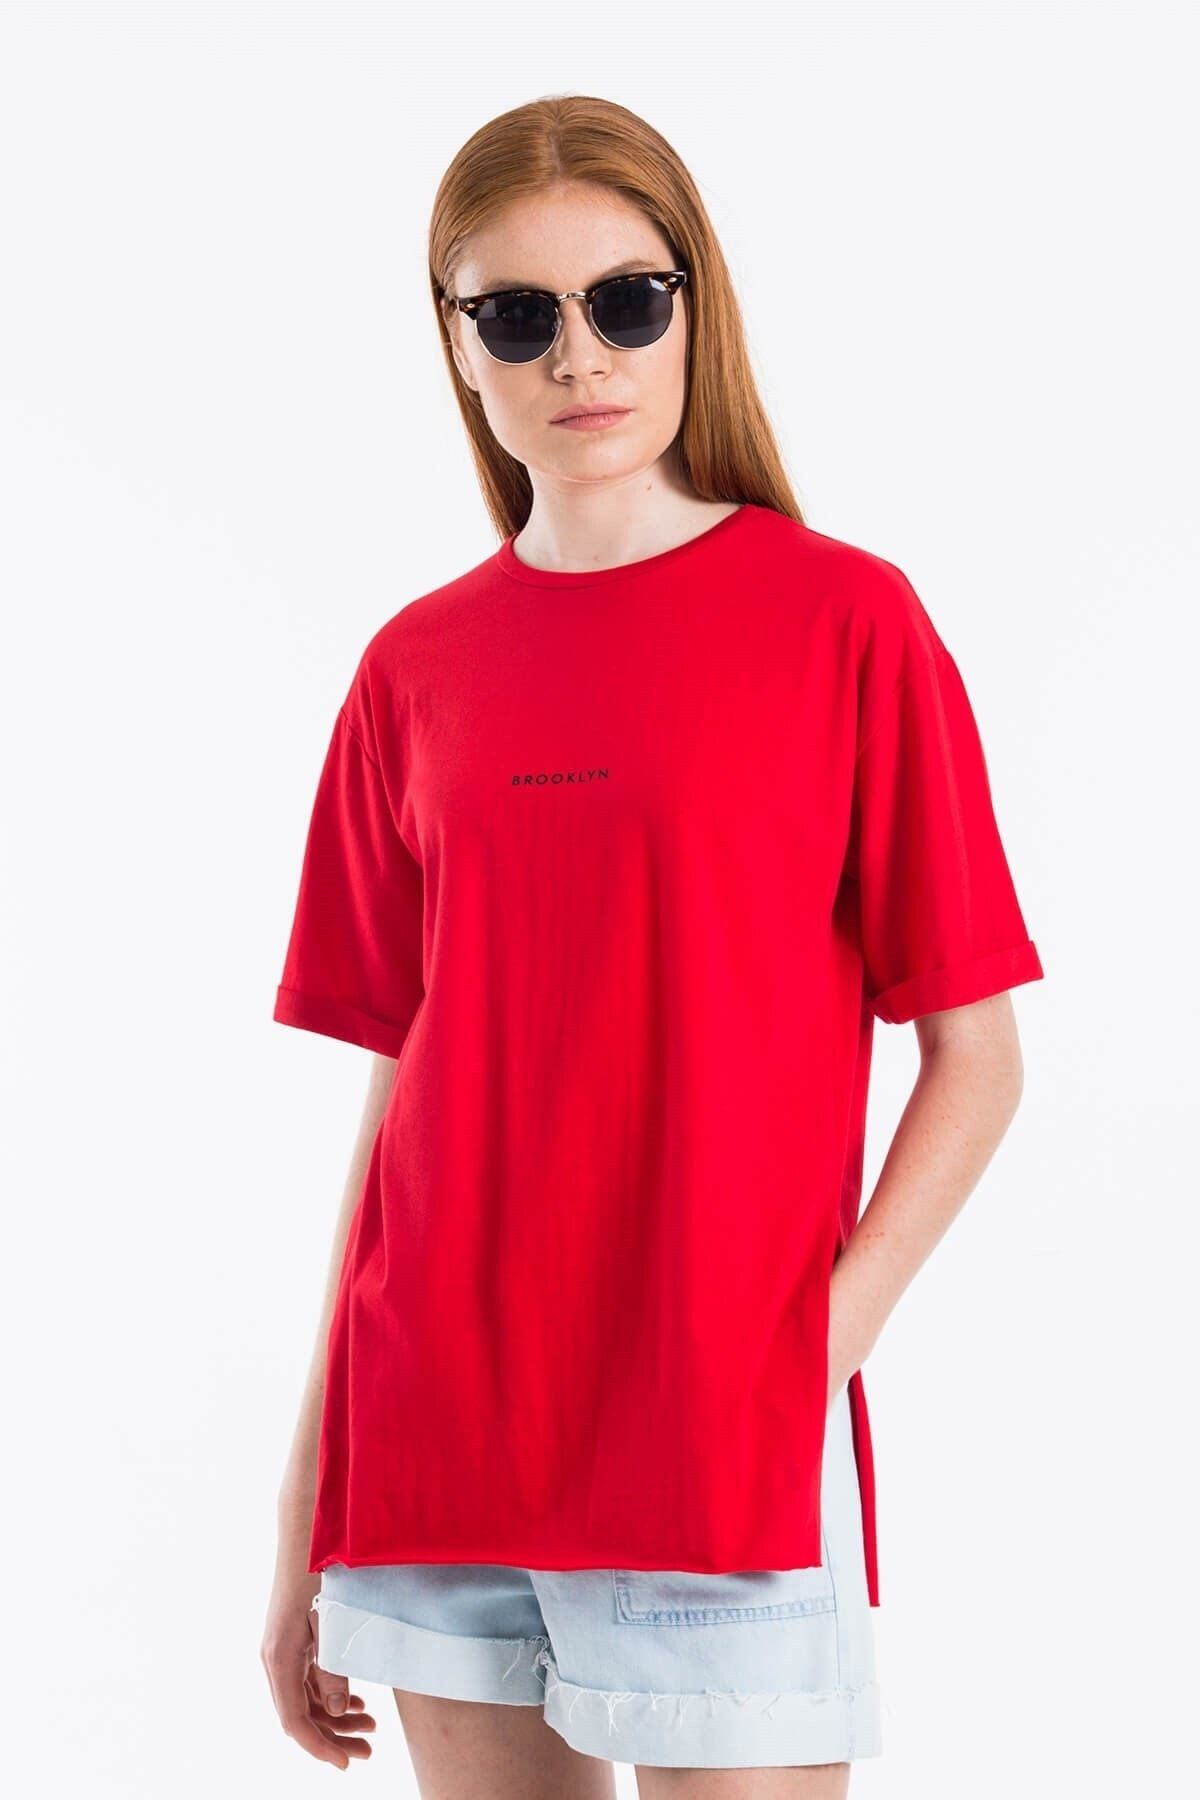 Mossta Kadın Kırmızı Yırtmaçlı Lazer Kesim T-shirt